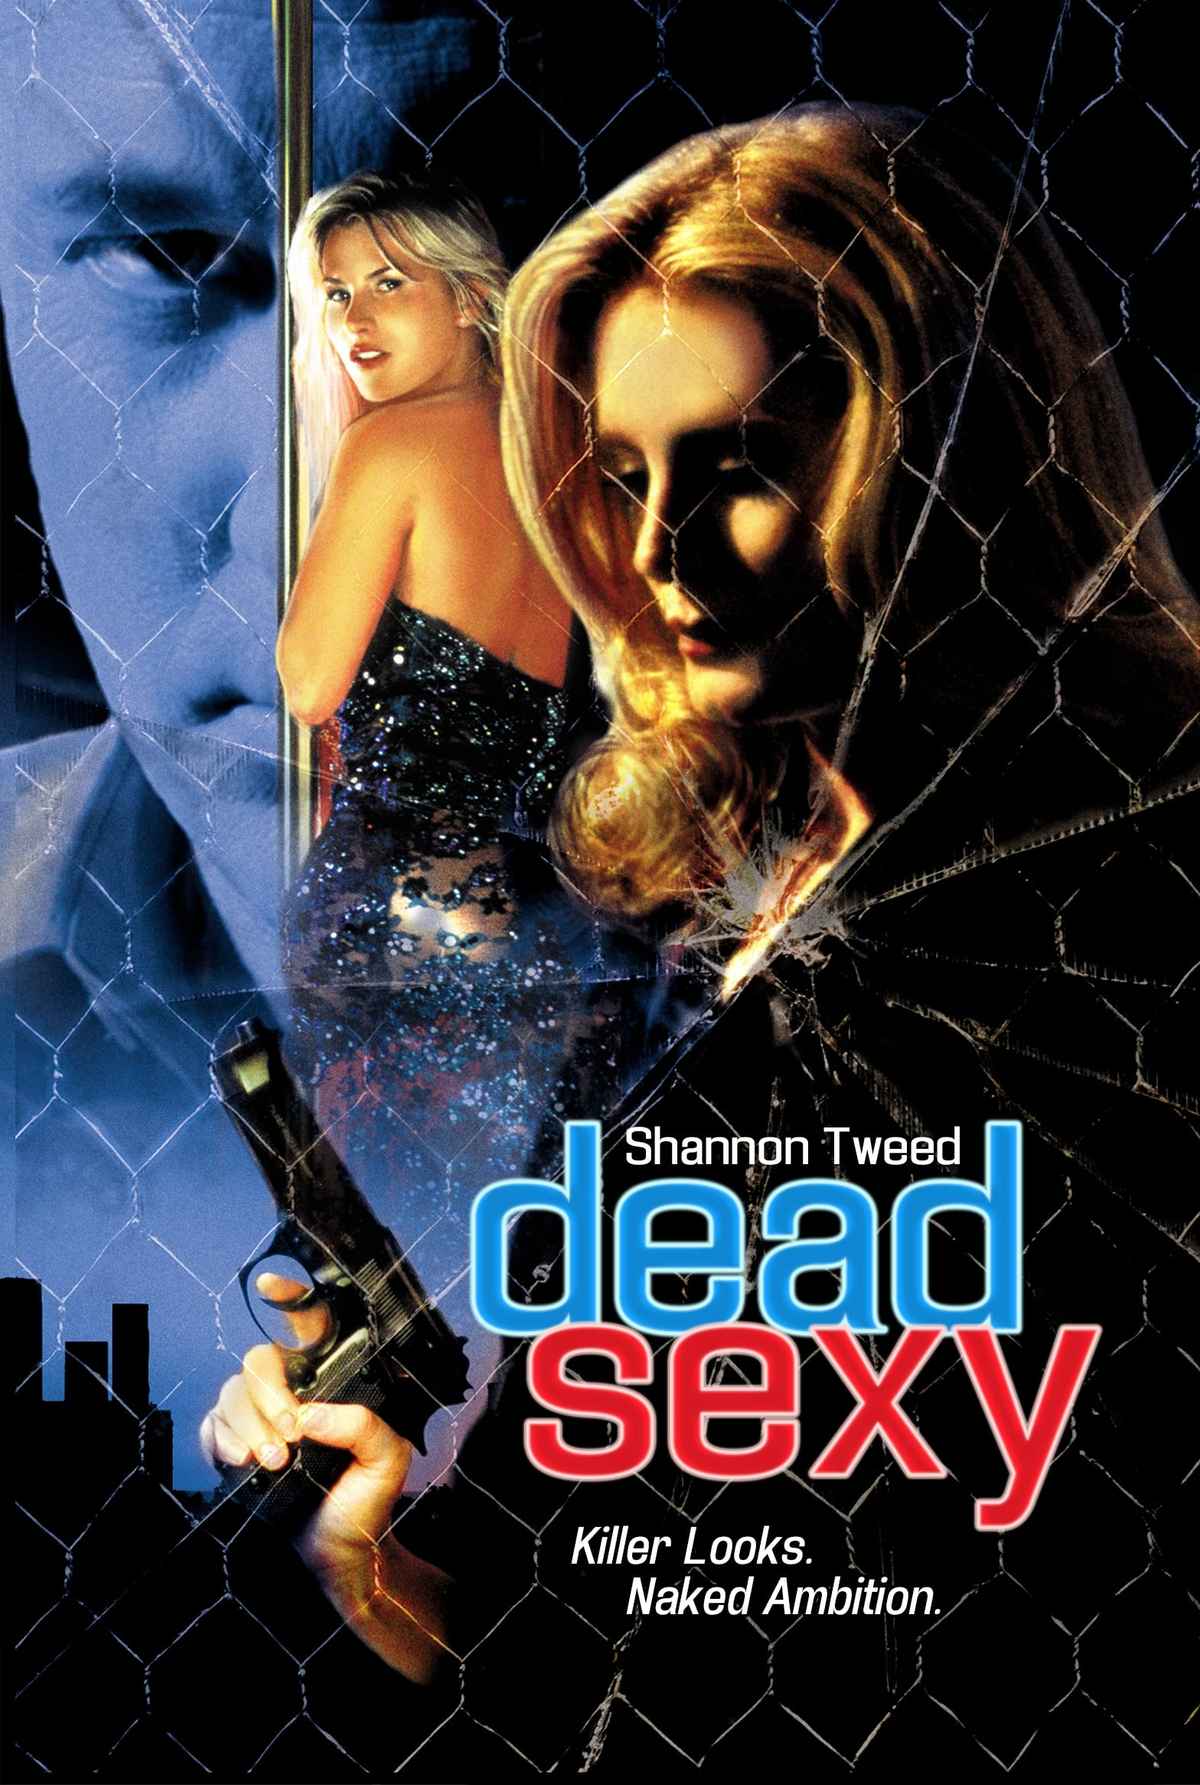 Sexy Film Watch